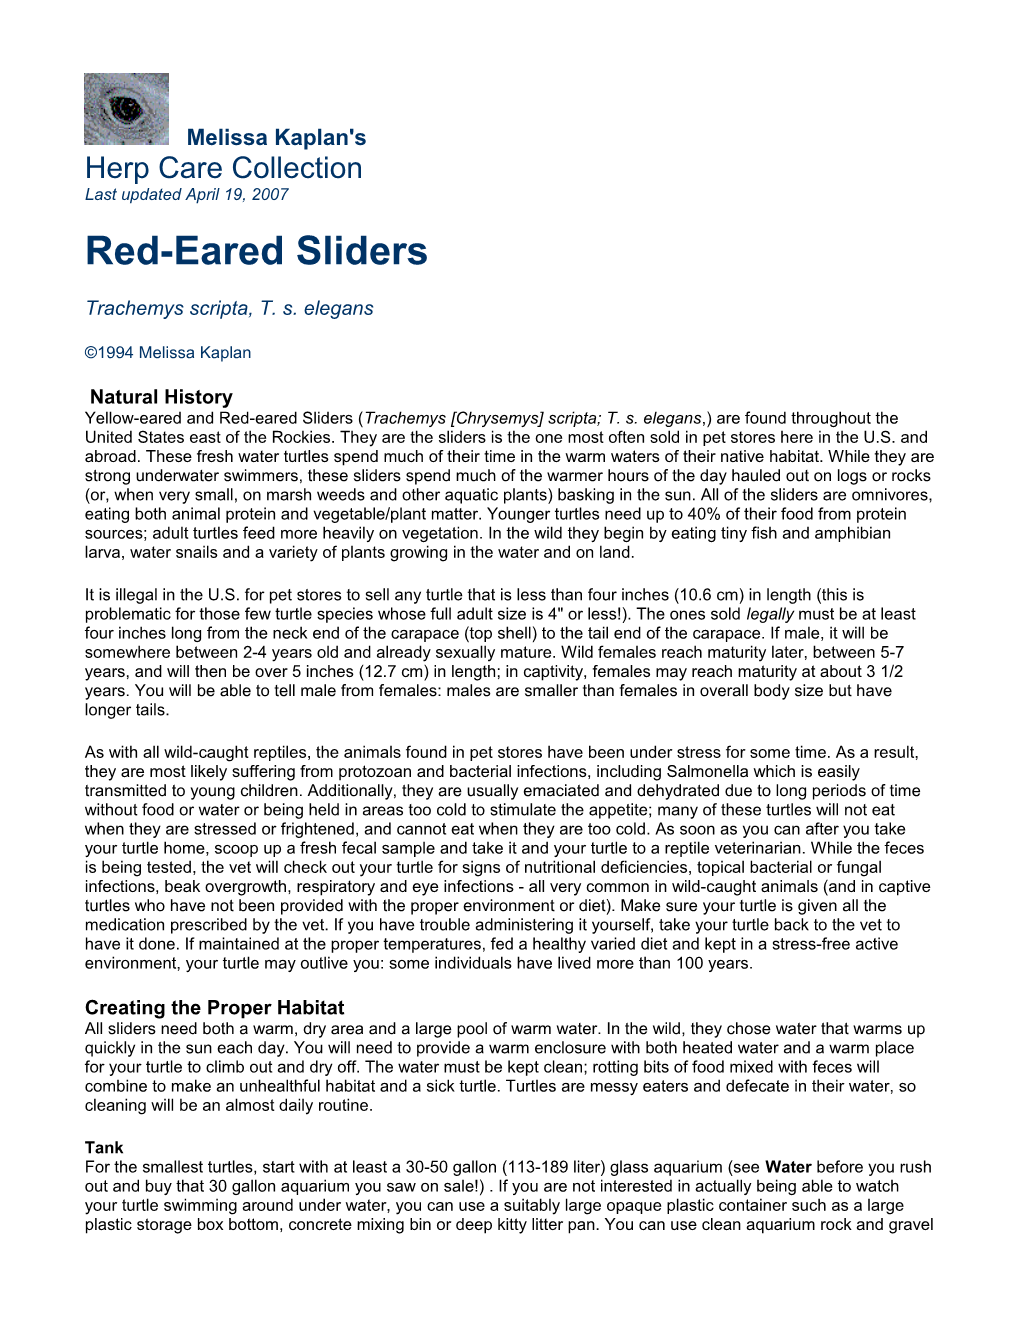 Red-Eared Sliders